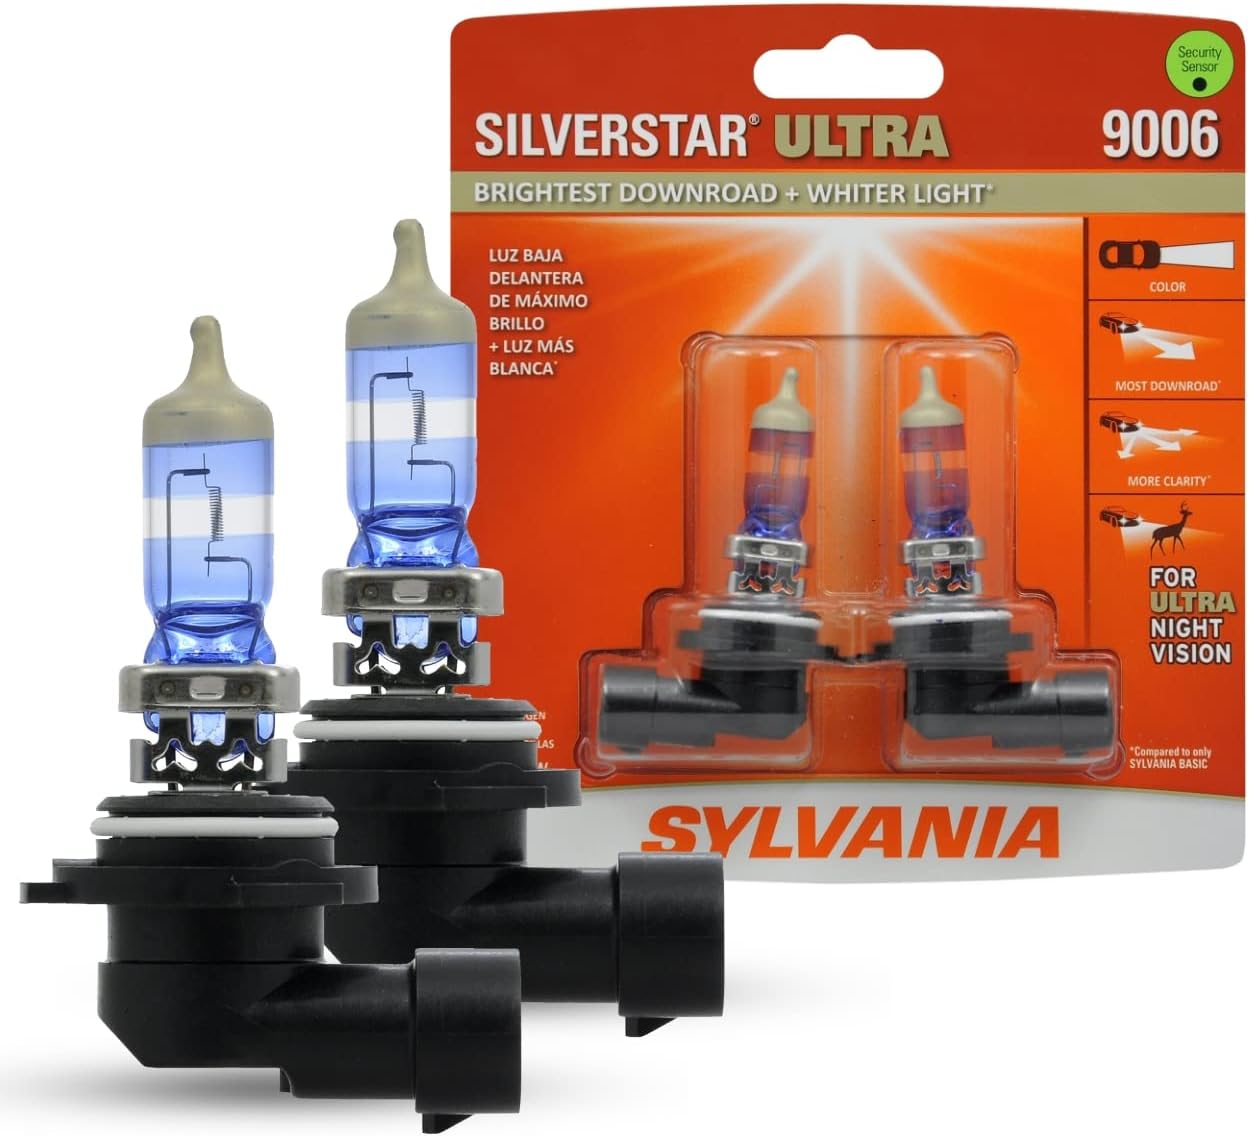 SYLVANIA 9006 SilverStar Ultra High Performance Halogen Headlight Bulb, (Contains 2 Bulbs)